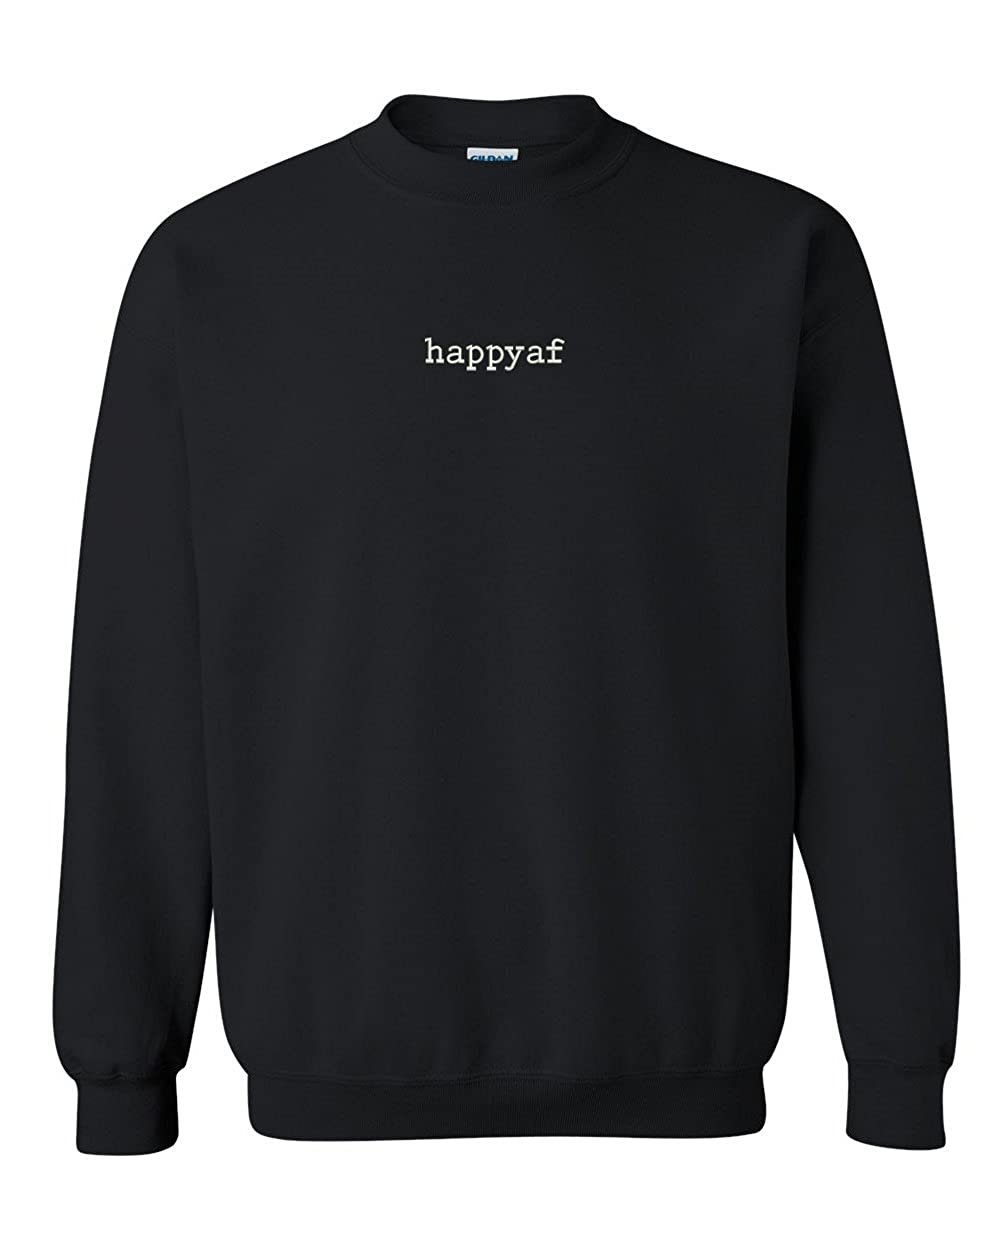 Trendy Apparel Shop Happayaf Embroidered Crewneck Sweatshirt